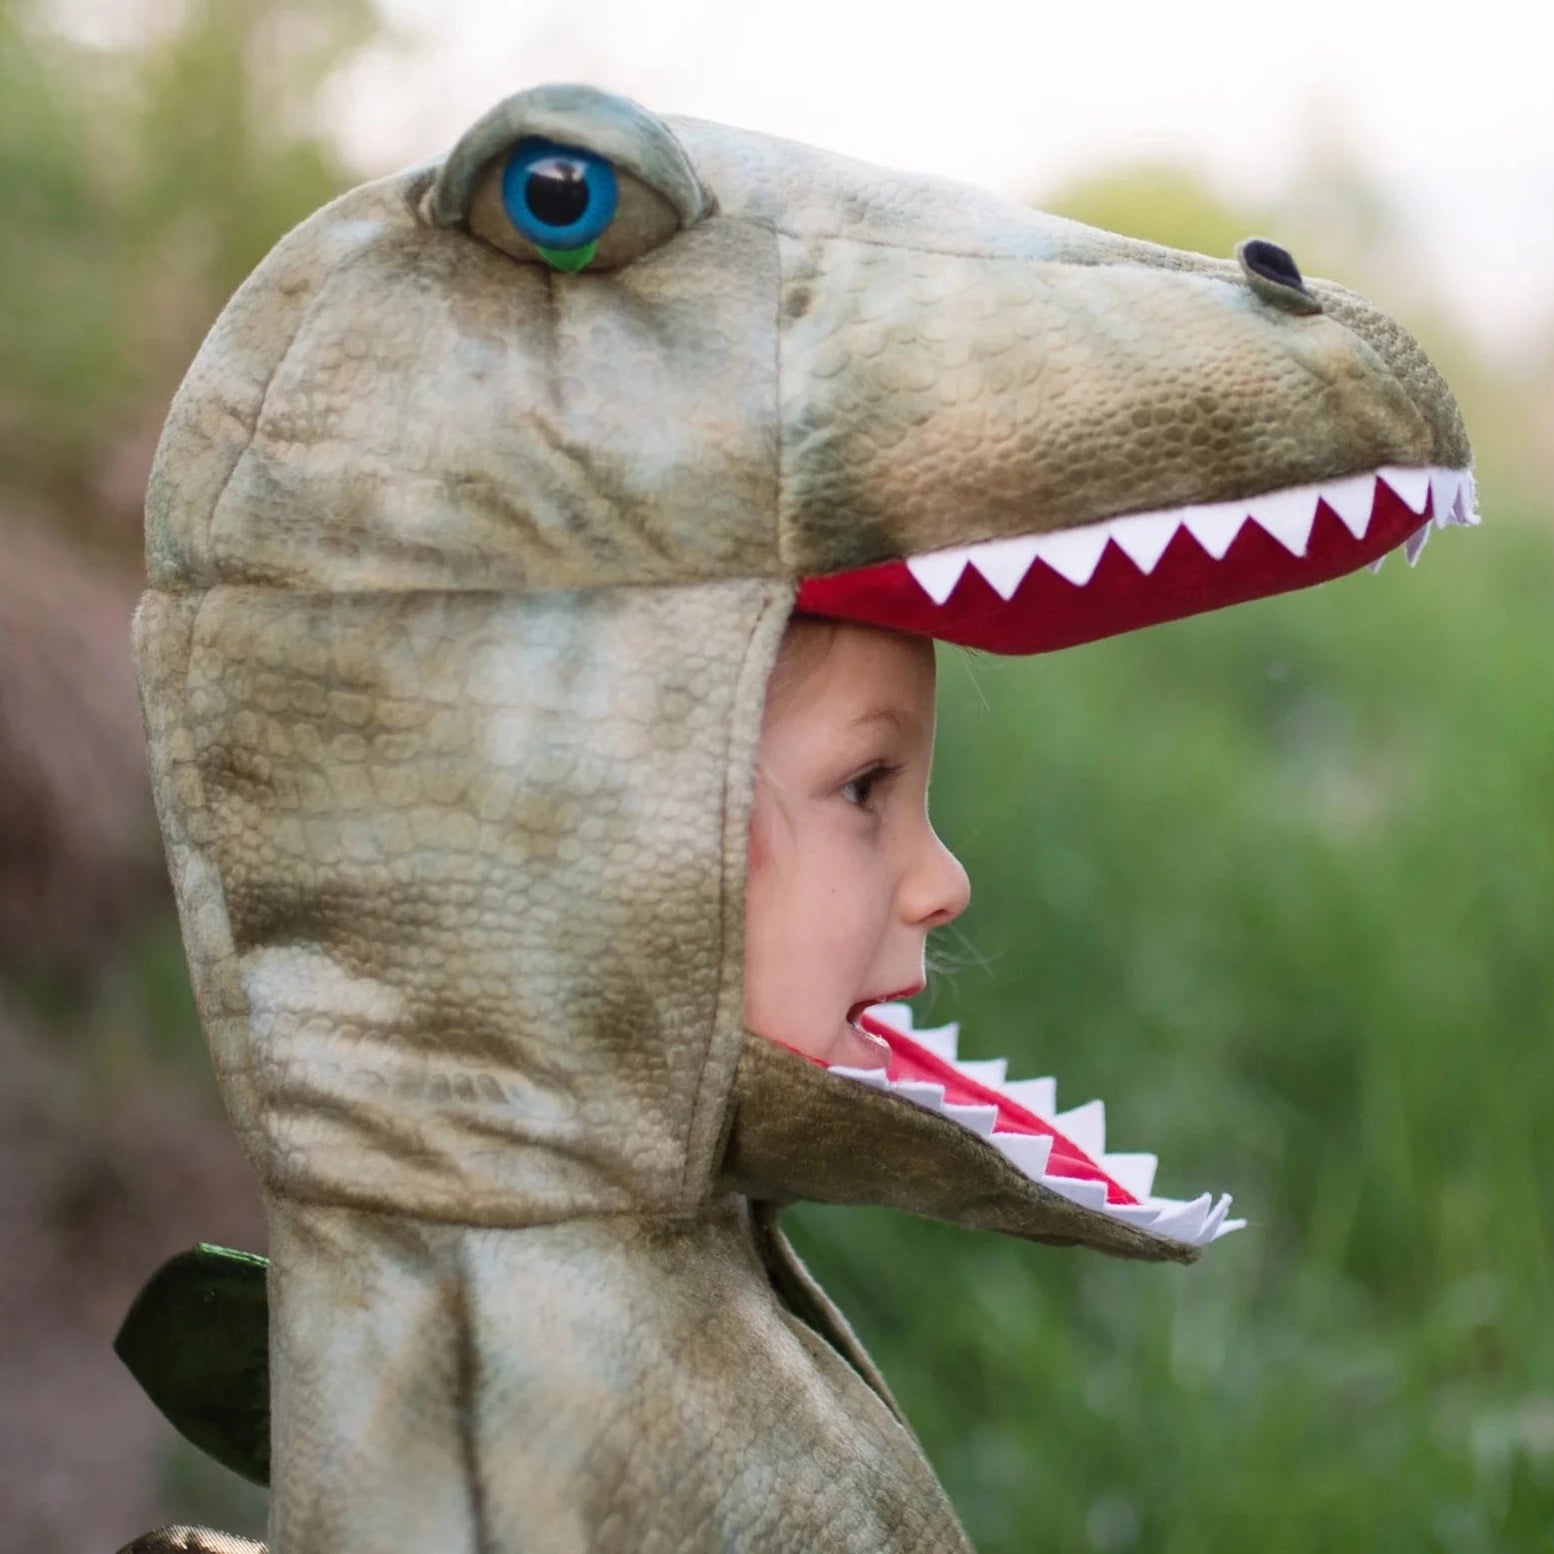 T-Rex Dino Kostüm / Dinosaurier Verkleidung